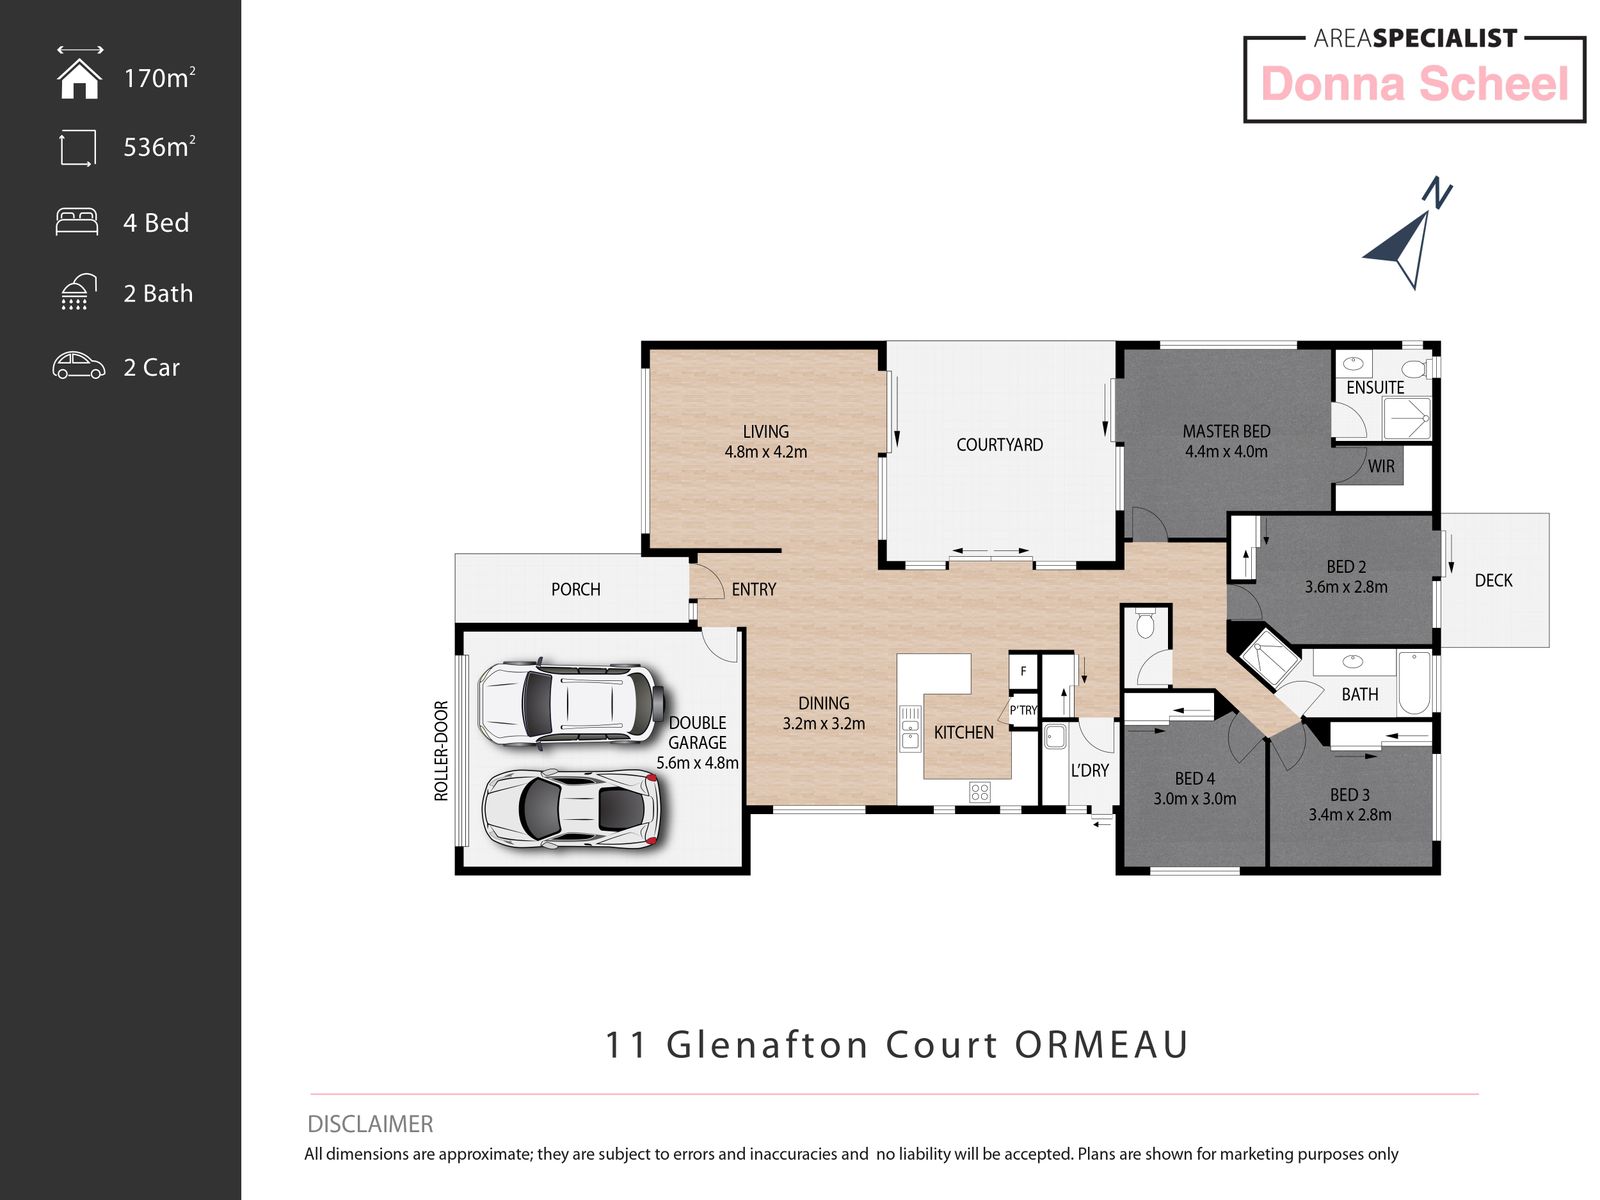 11 Glenafton Court, Ormeau